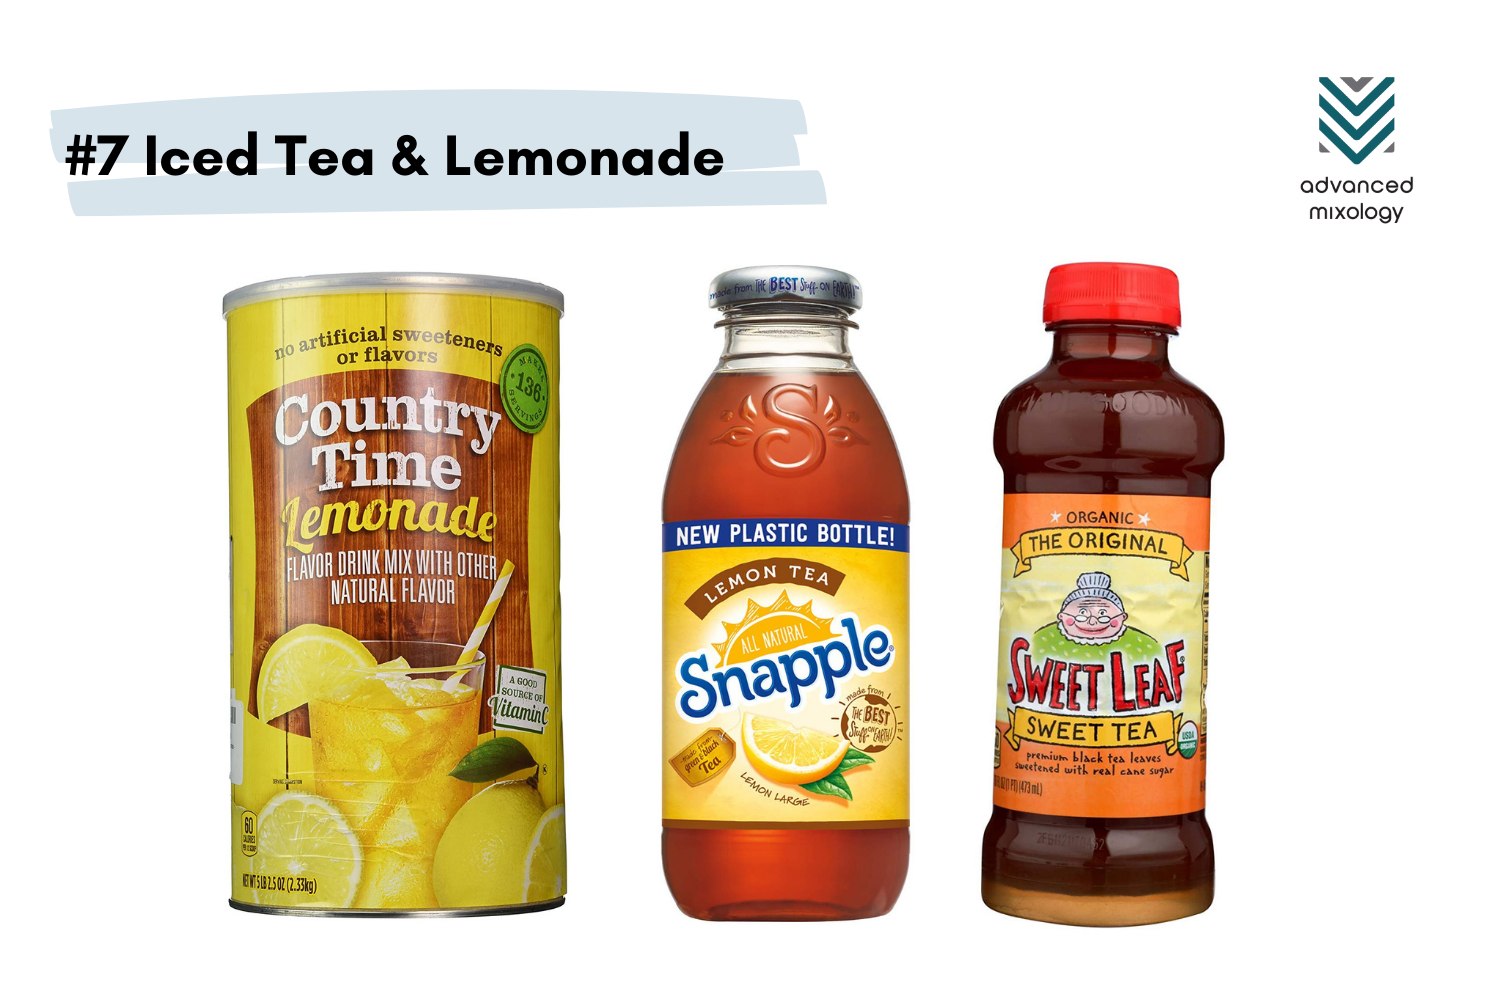 Iced Tea and Lemonade